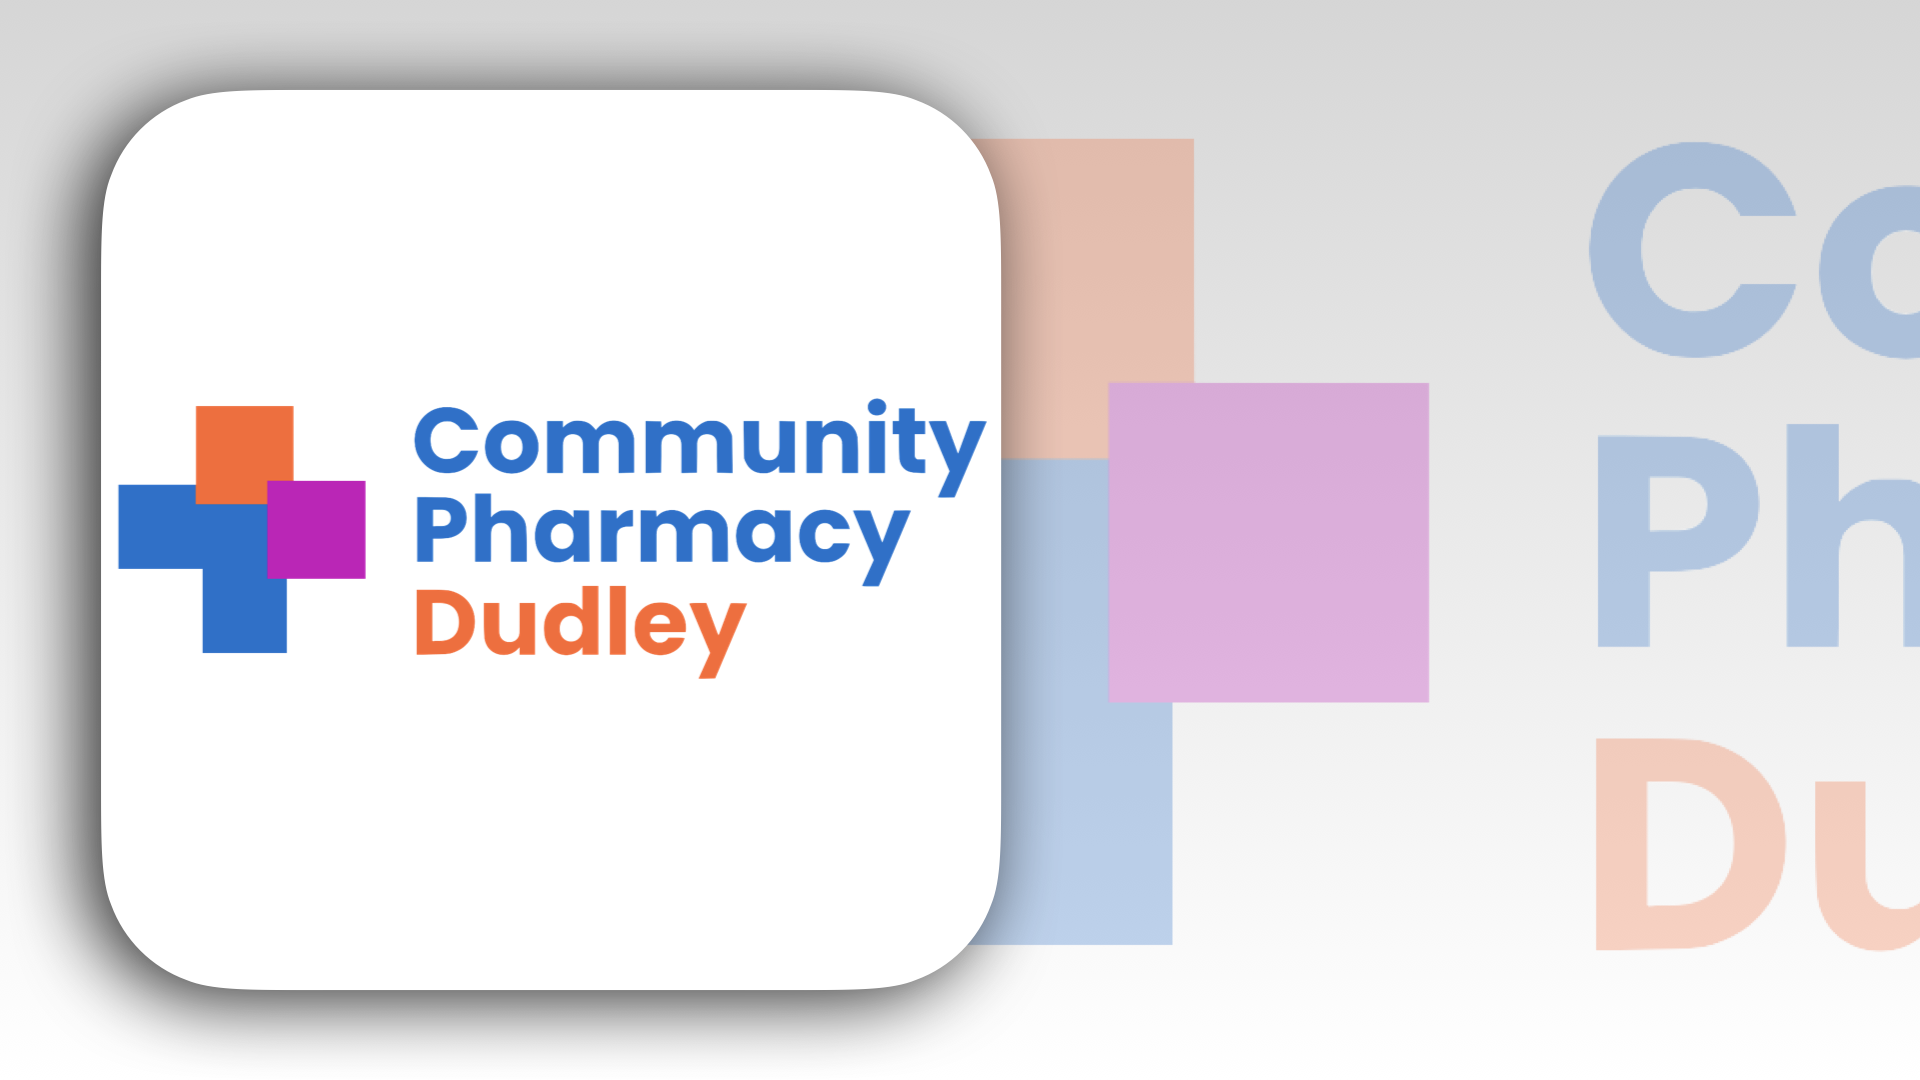 Community Pharmacy Dudley